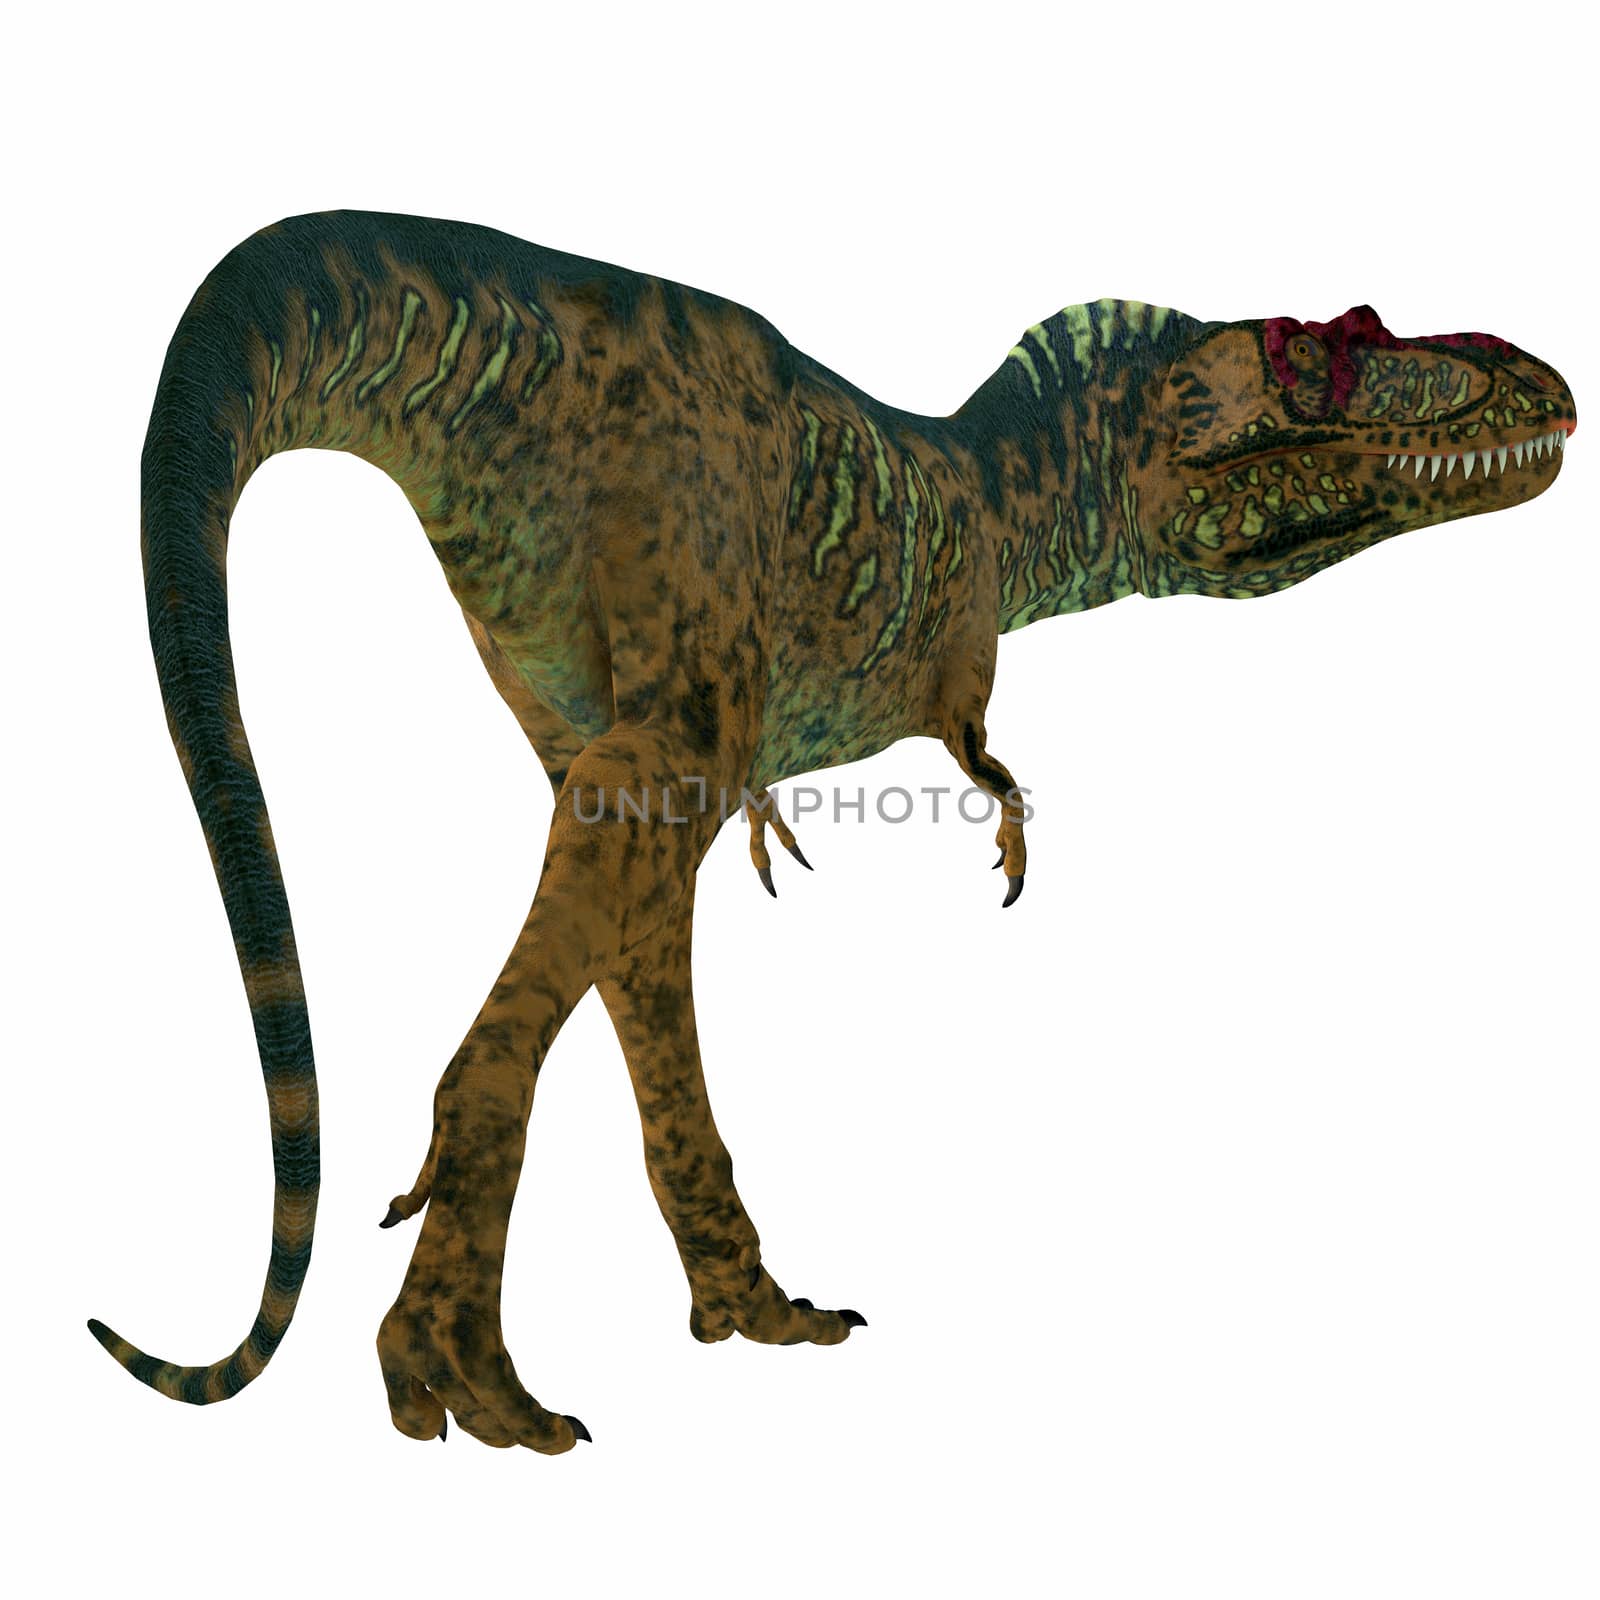 Albertosaurus Dinosaur Tail by Catmando